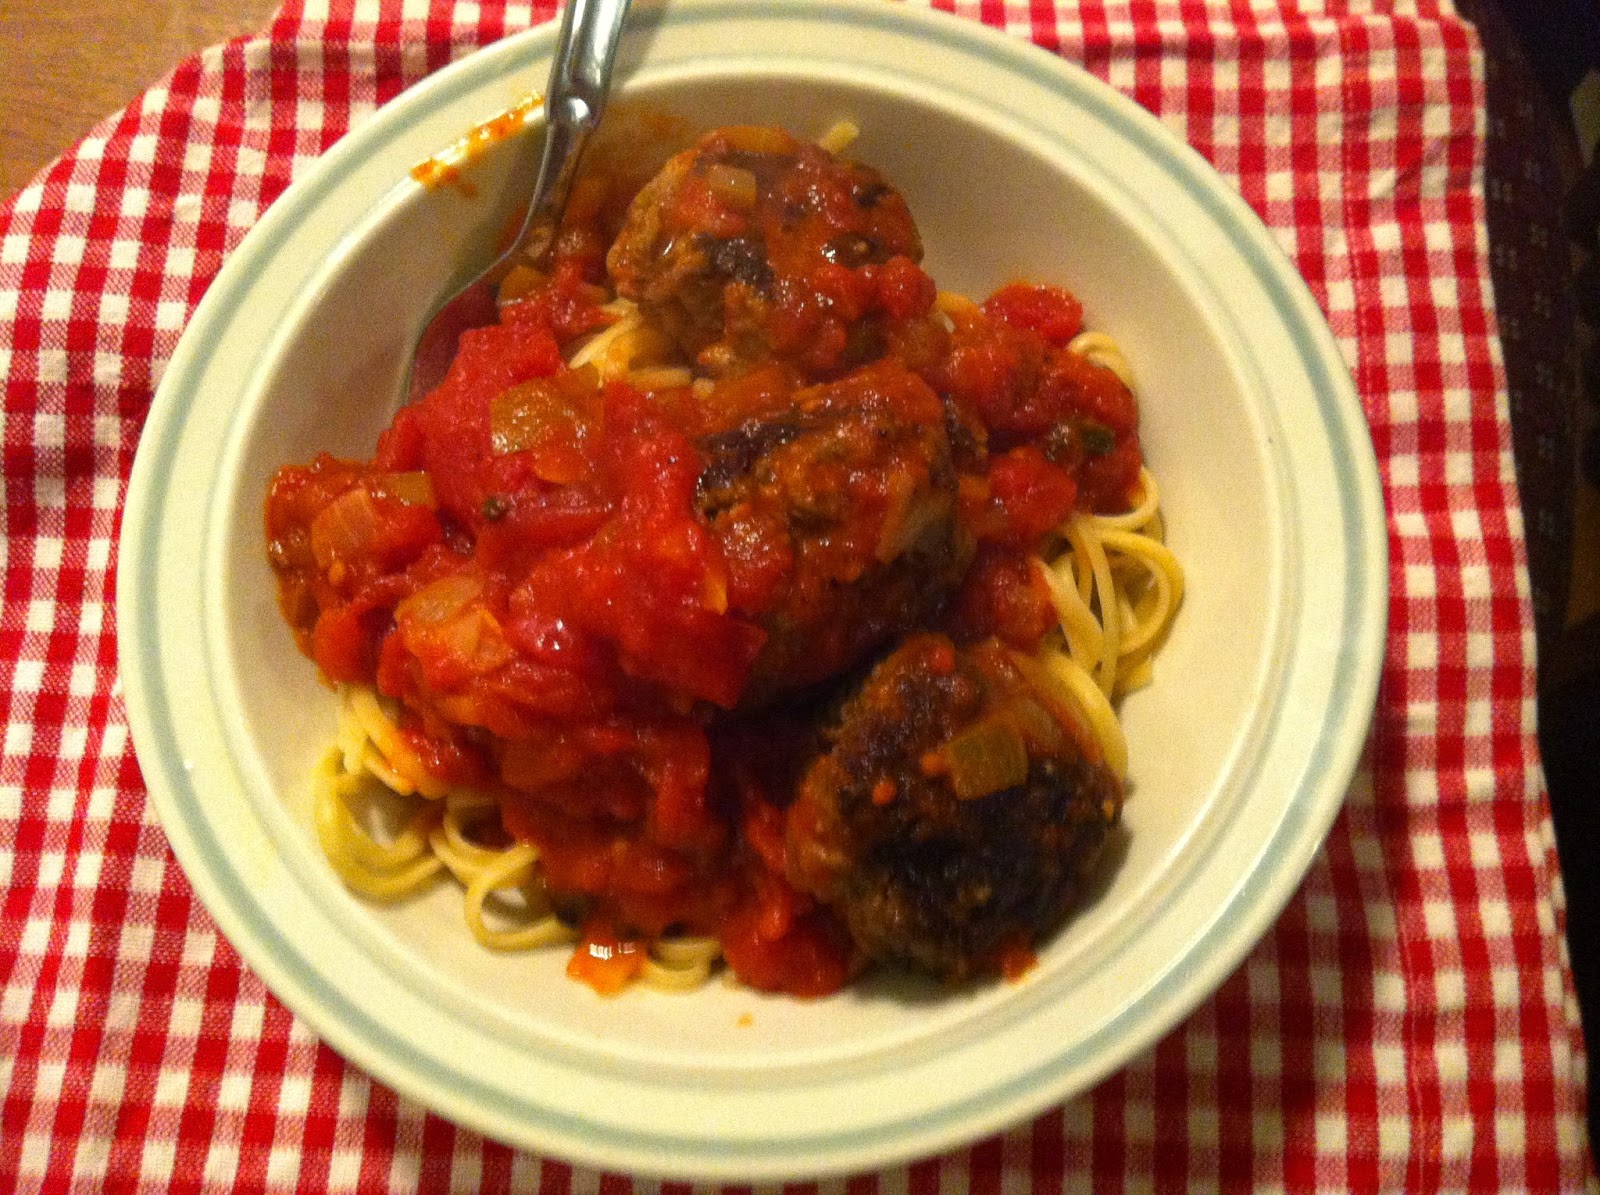 wwdh - spaghetti and meatballs with tomato sauce